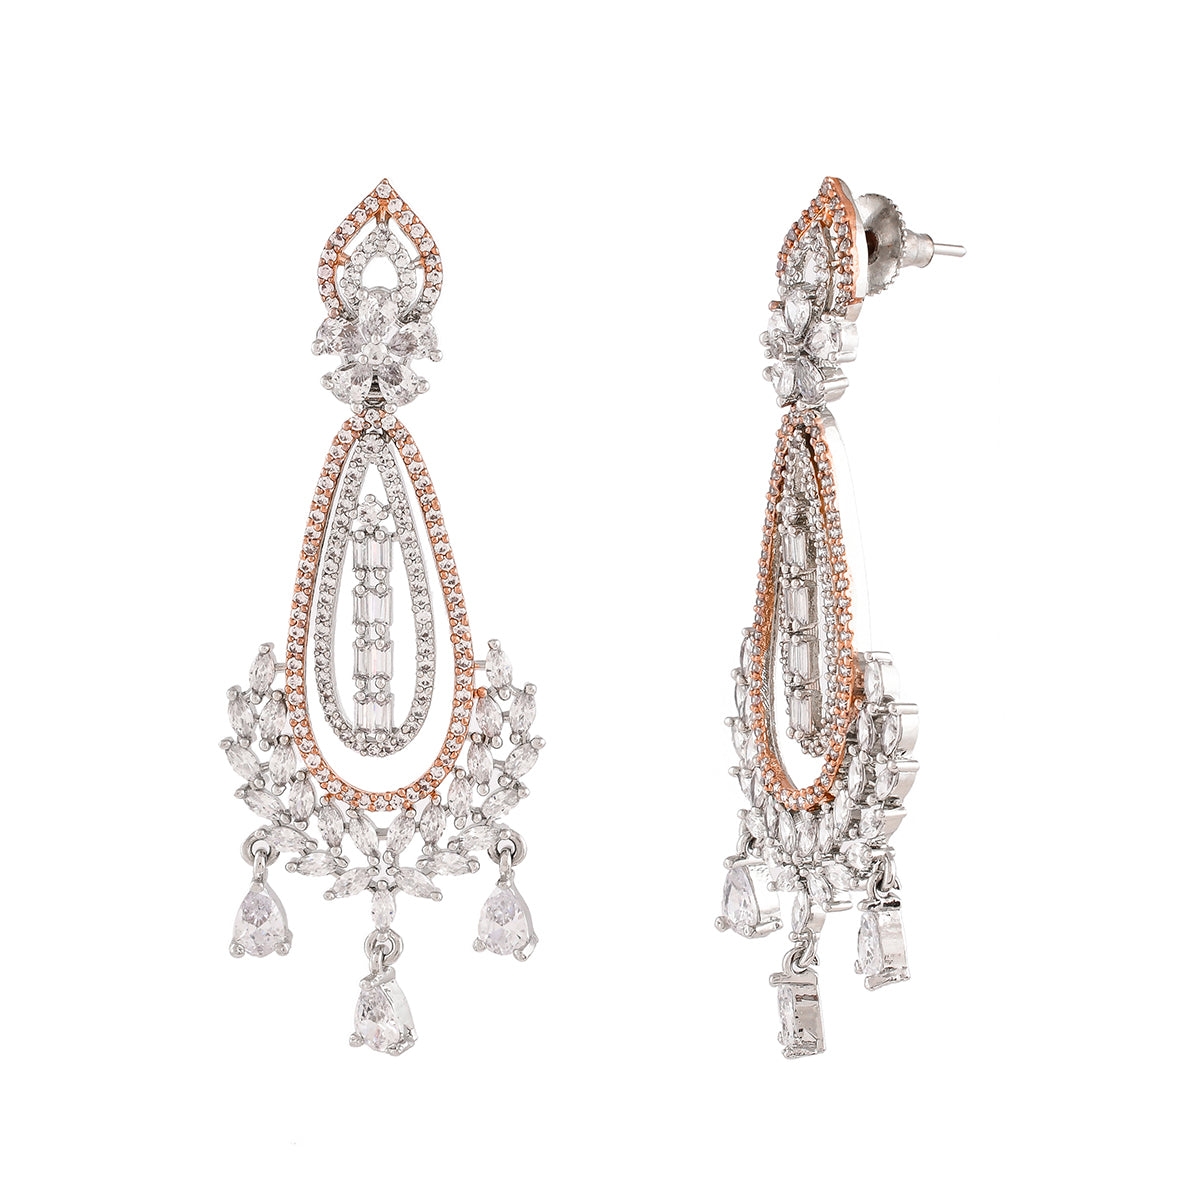 Sparkling Elegance Teardrop and Marquise Cut CZ Dangler Earrings